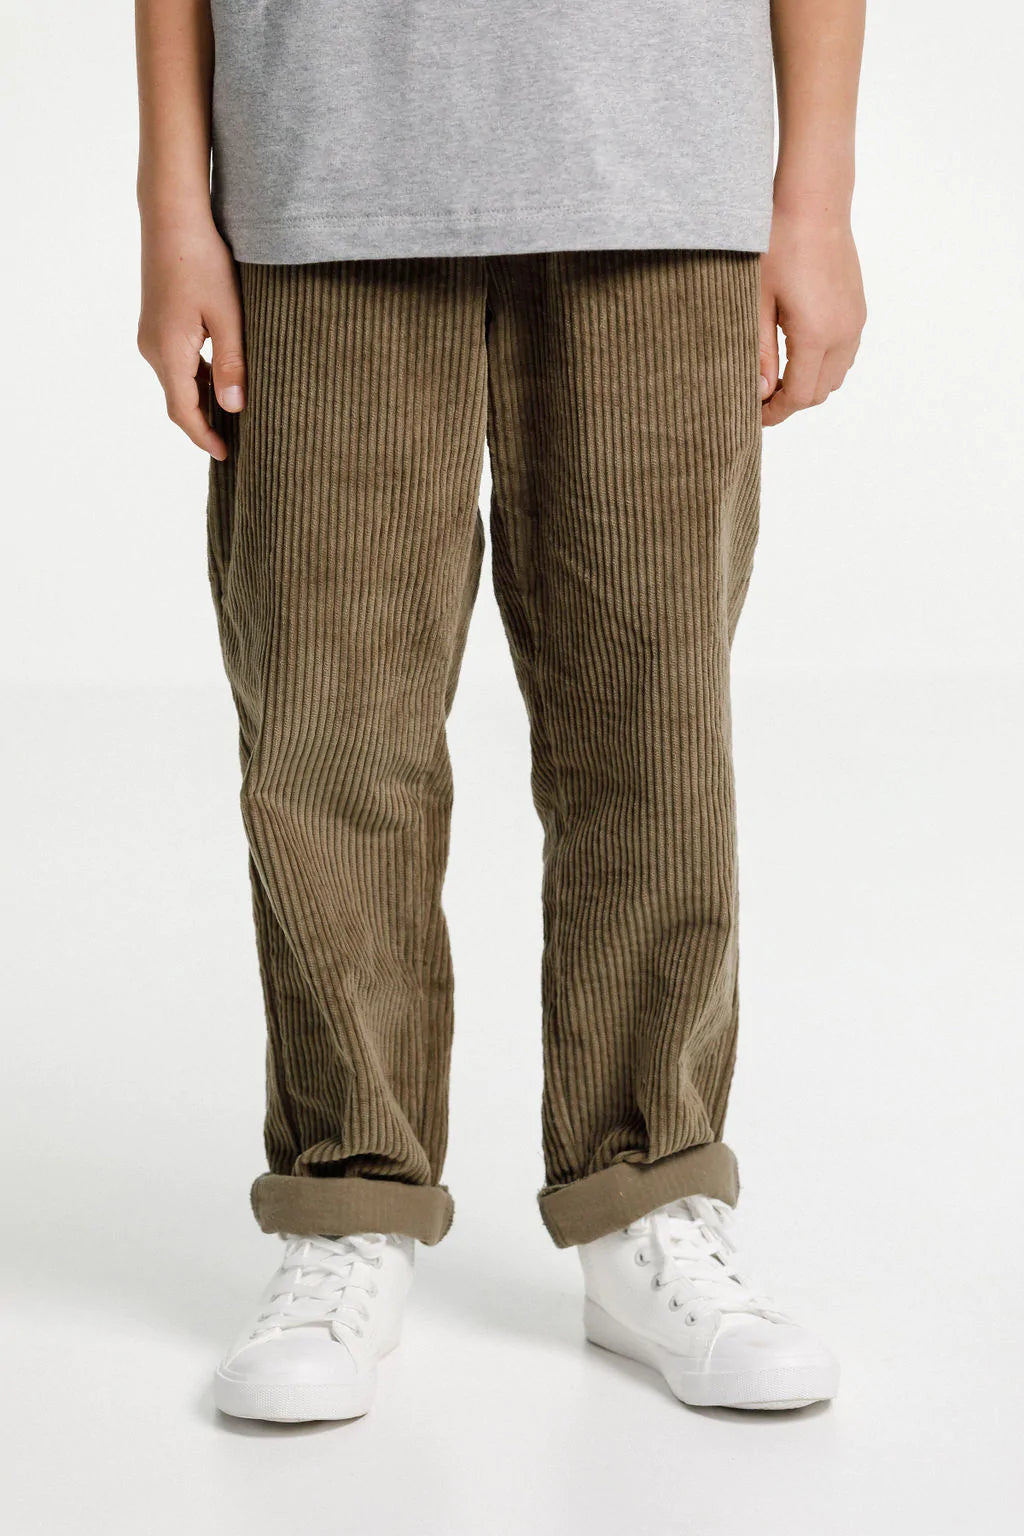 Tula pantalon enfant - Patron papier -  Papercut